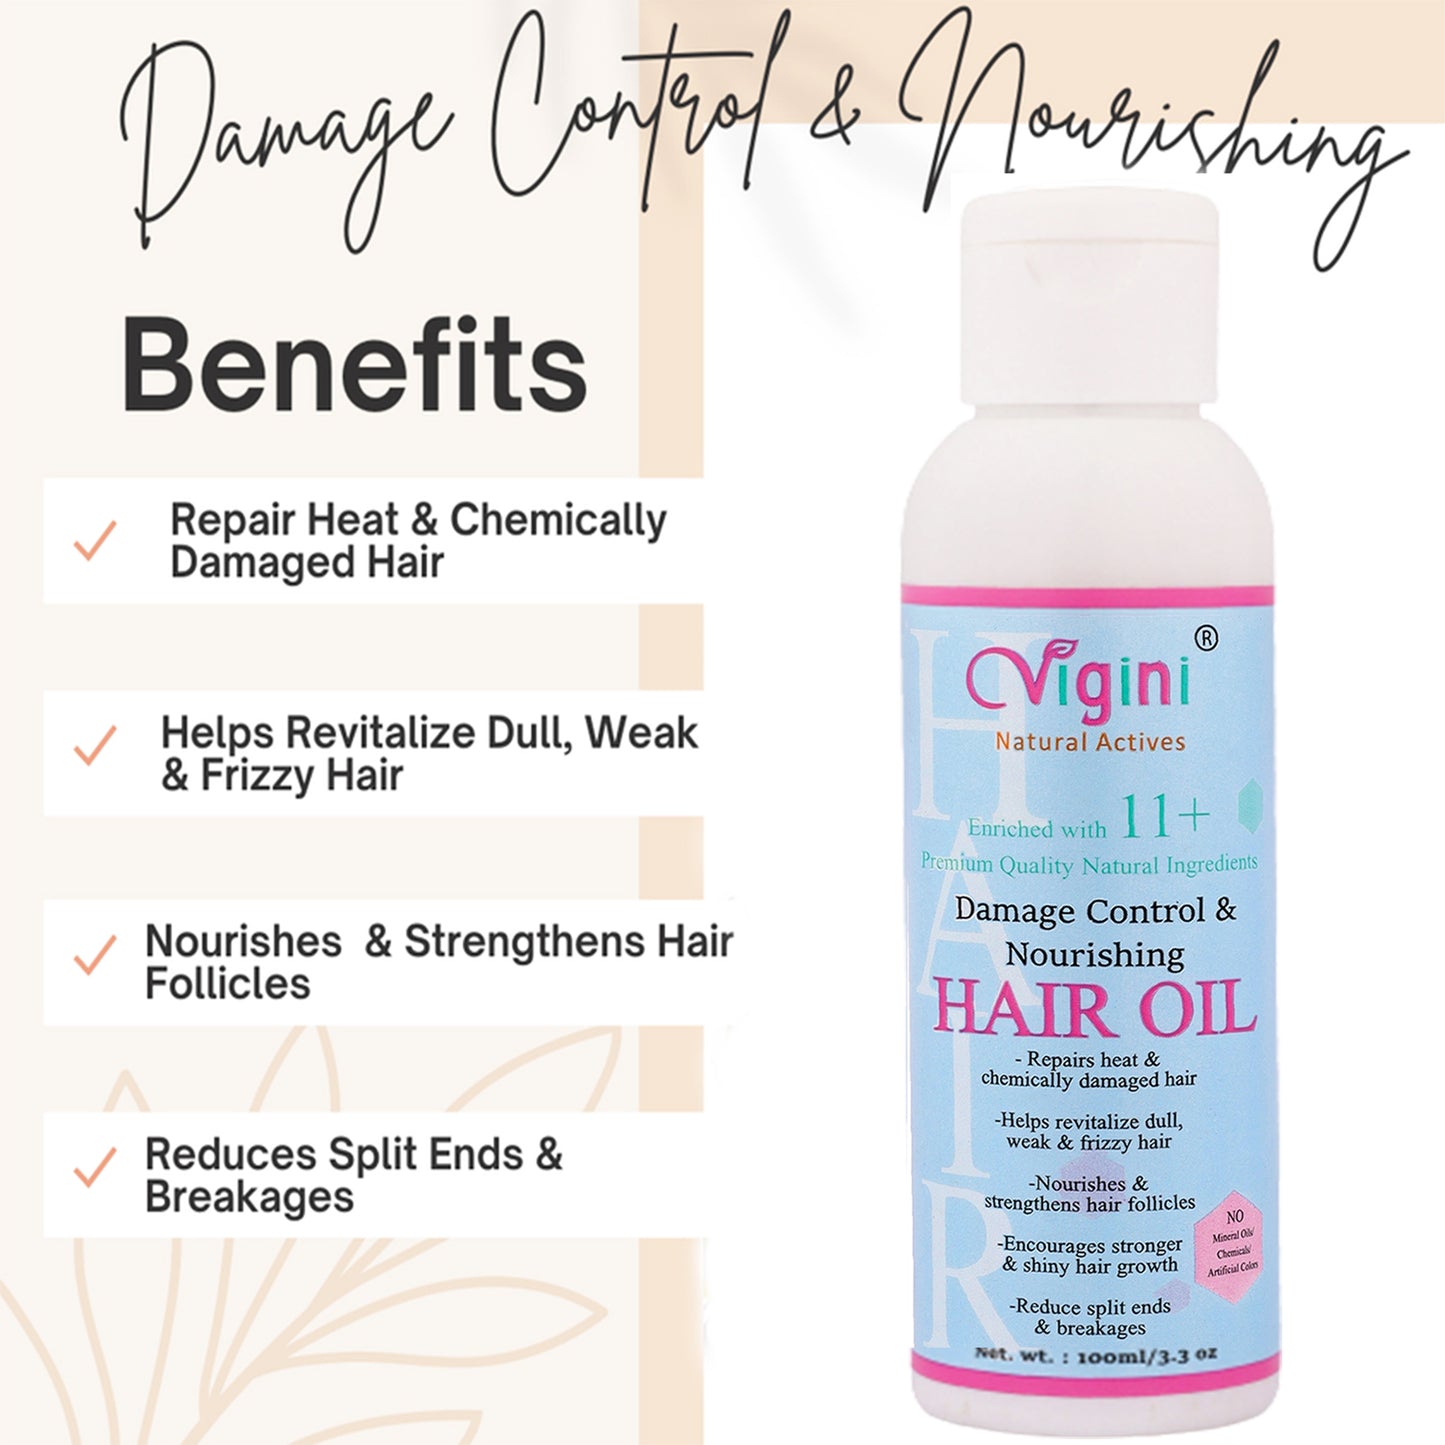 Vigini Damage Repair Hair Fall Control Oil, 100ml